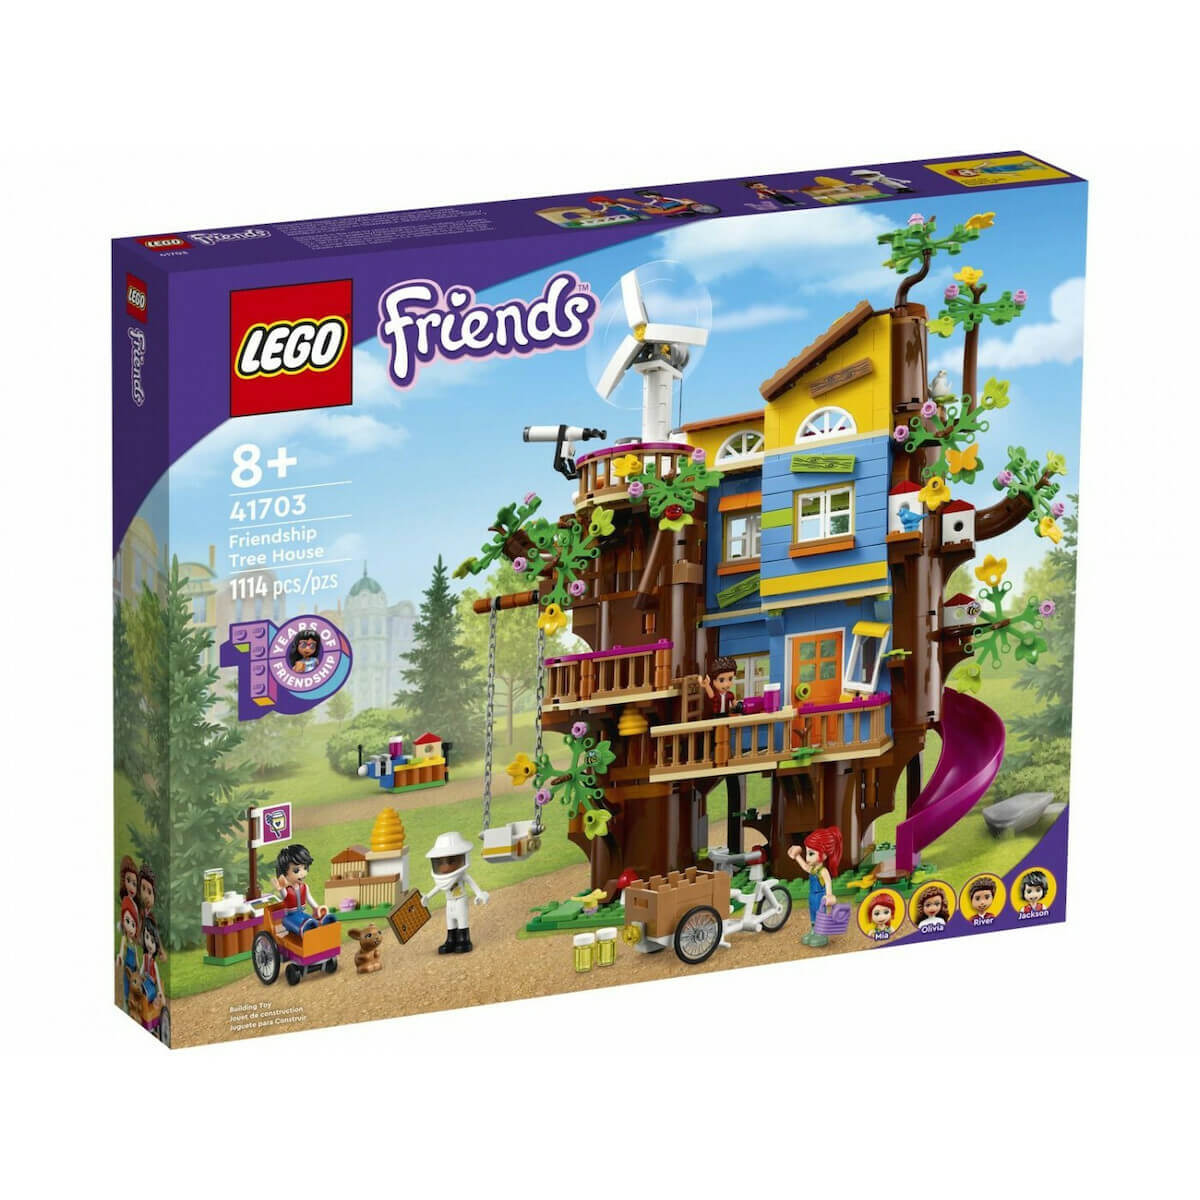 Passed Confront tent Lego Friends: Friendship Tree House 41703 για 8+ Ετών - Lego | SHOPFLIX.gr